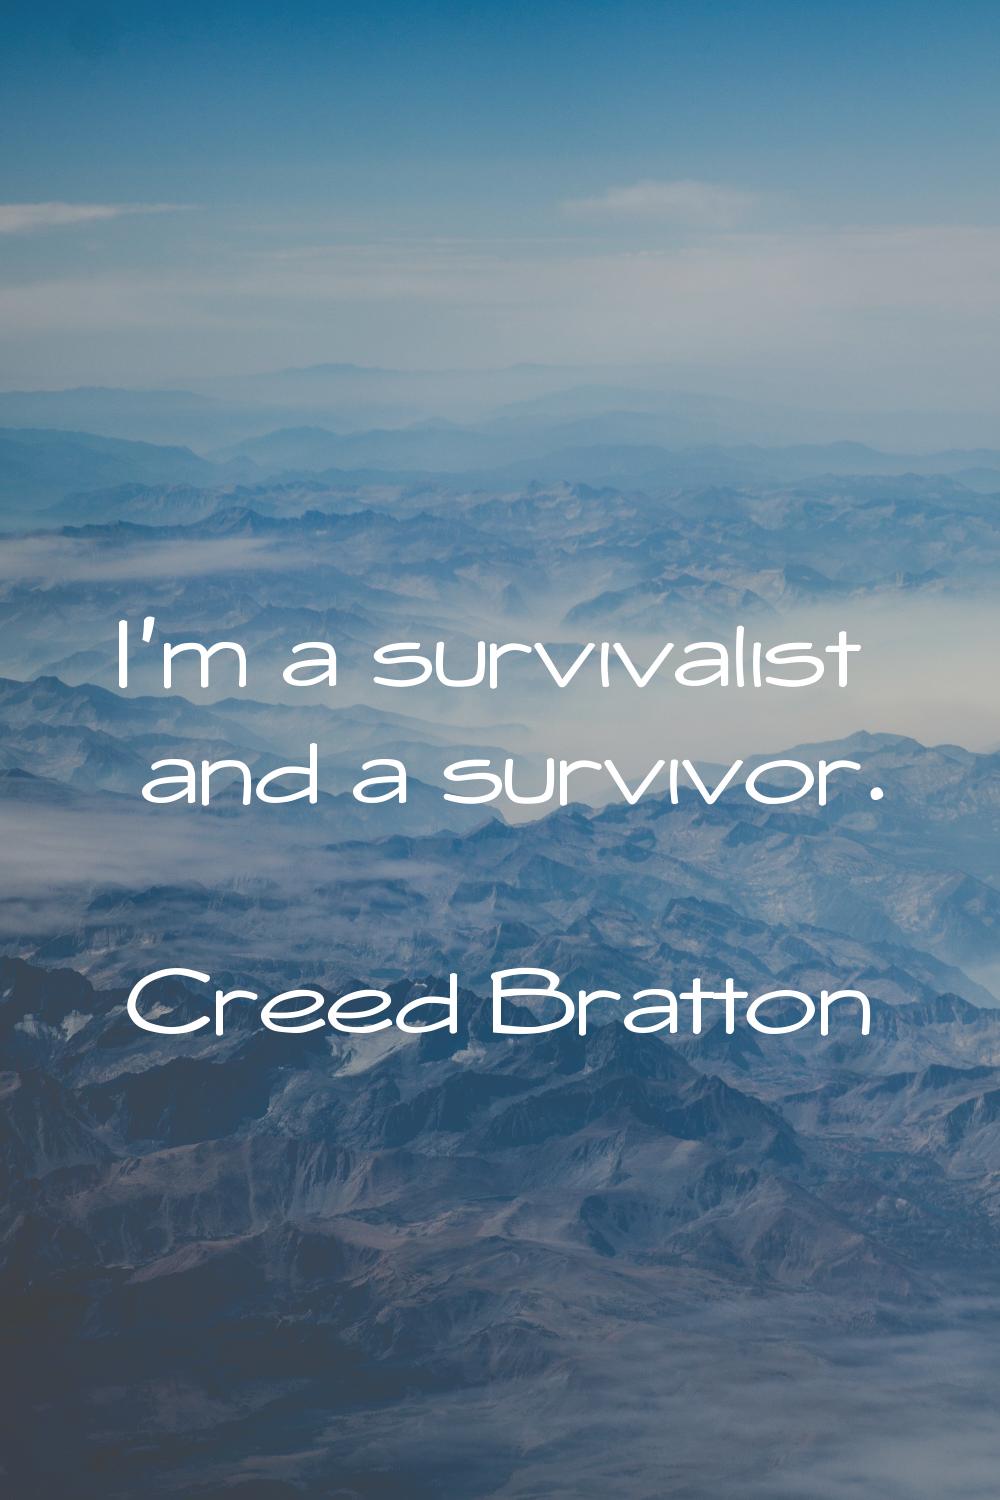 I'm a survivalist and a survivor.